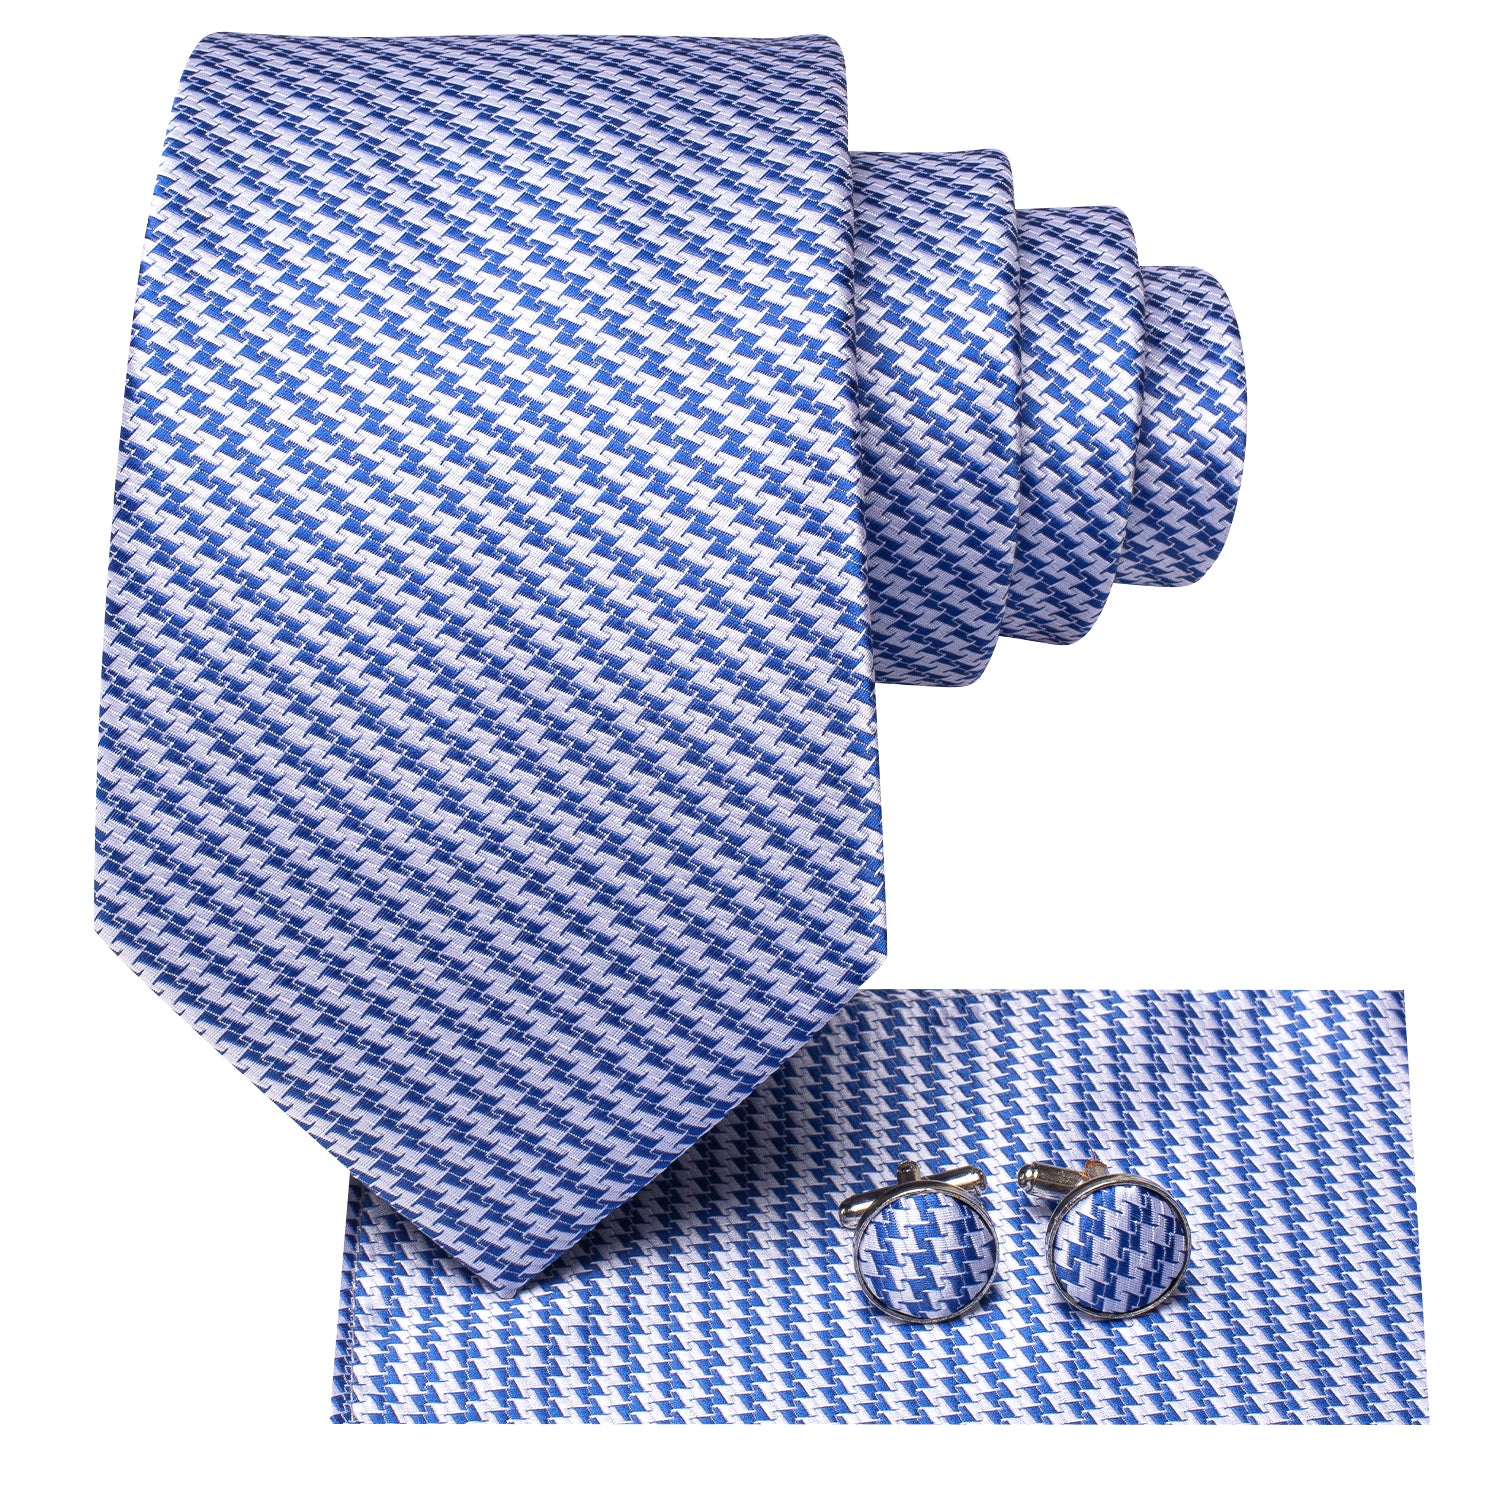 New Blue White Sawtooth Tie Pocket Square Cufflinks Set